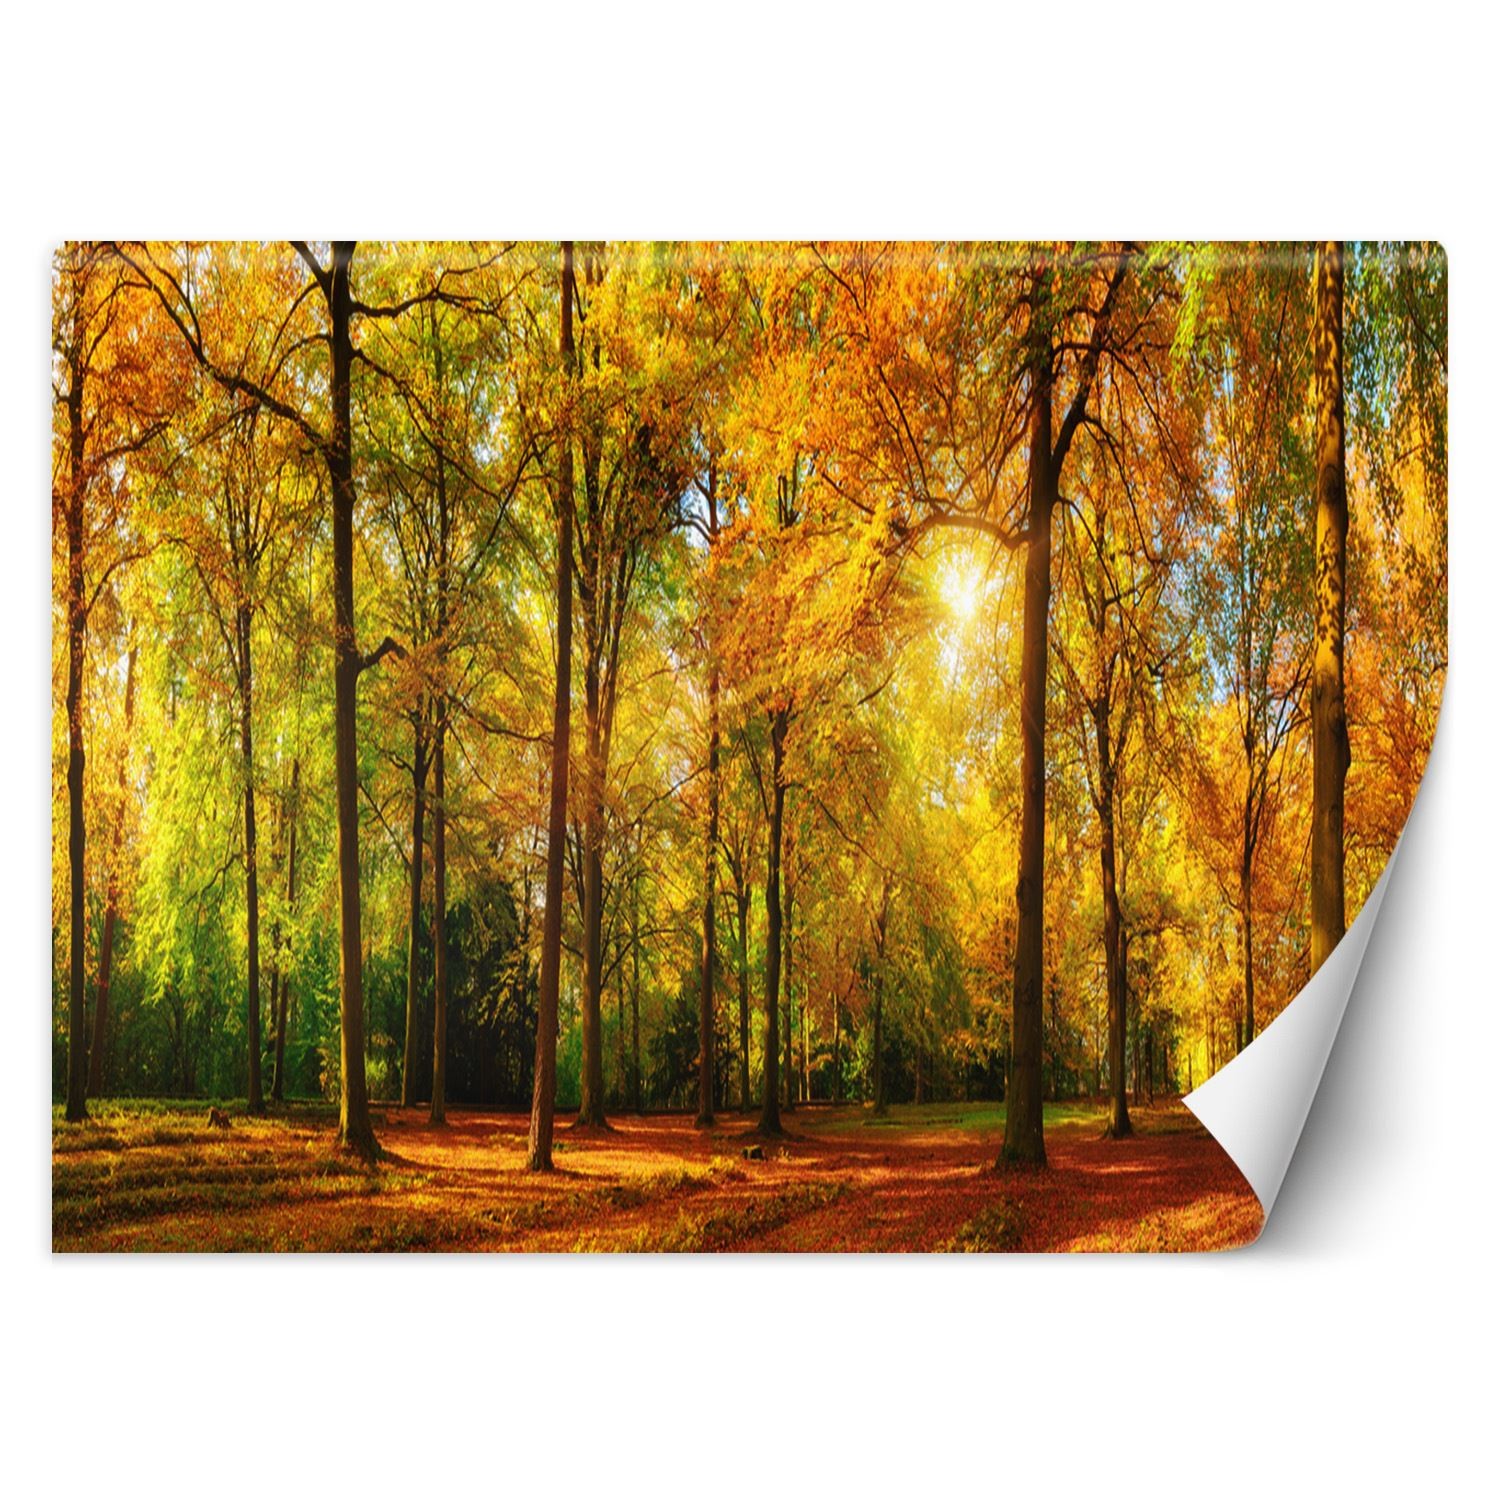 Trend24 – Behang – Herfstbos – Vliesbehang – Fotobehang Natuur – Behang Woonkamer – 350×245 cm – Incl. behanglijm